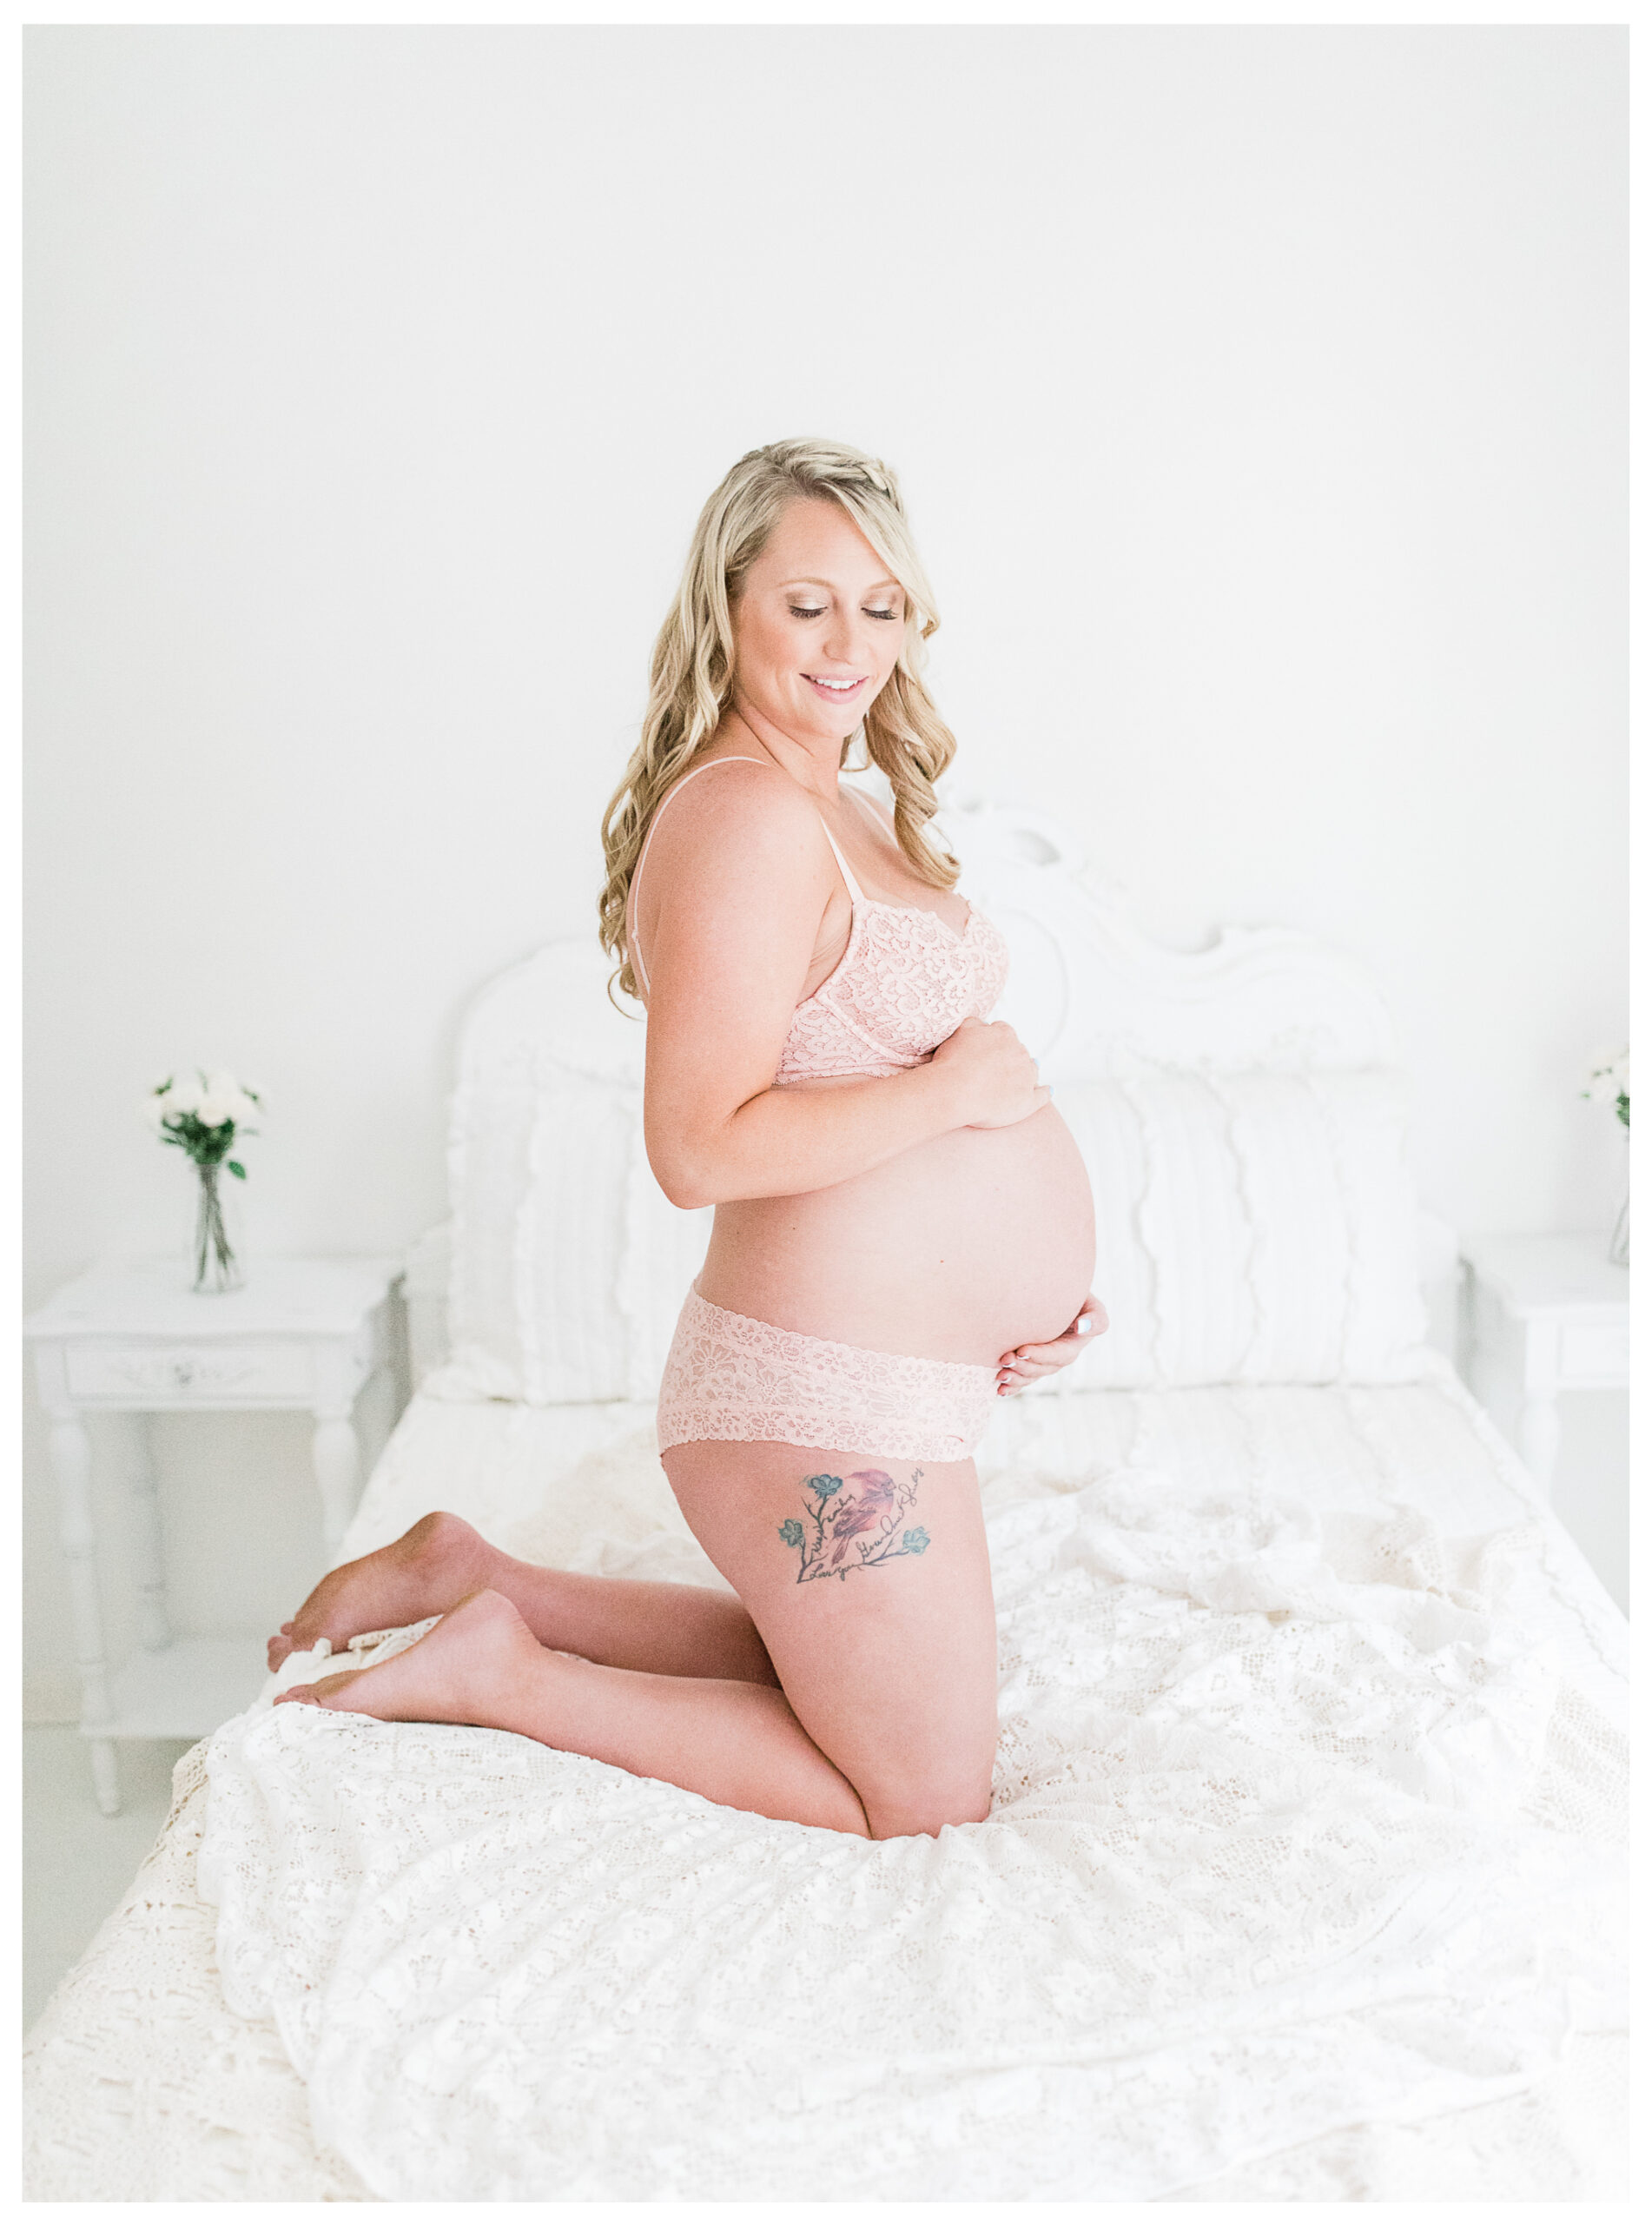 Dayton Boudoir Maternity Photography | Winter Freire Photography | Dayton, Ohio Photography | Dayton, Ohio Maternity Session | Organic Maternity Boudoir Session Centerville, OH | Timeless Organic Elegant Maternity Boudoir Portraits